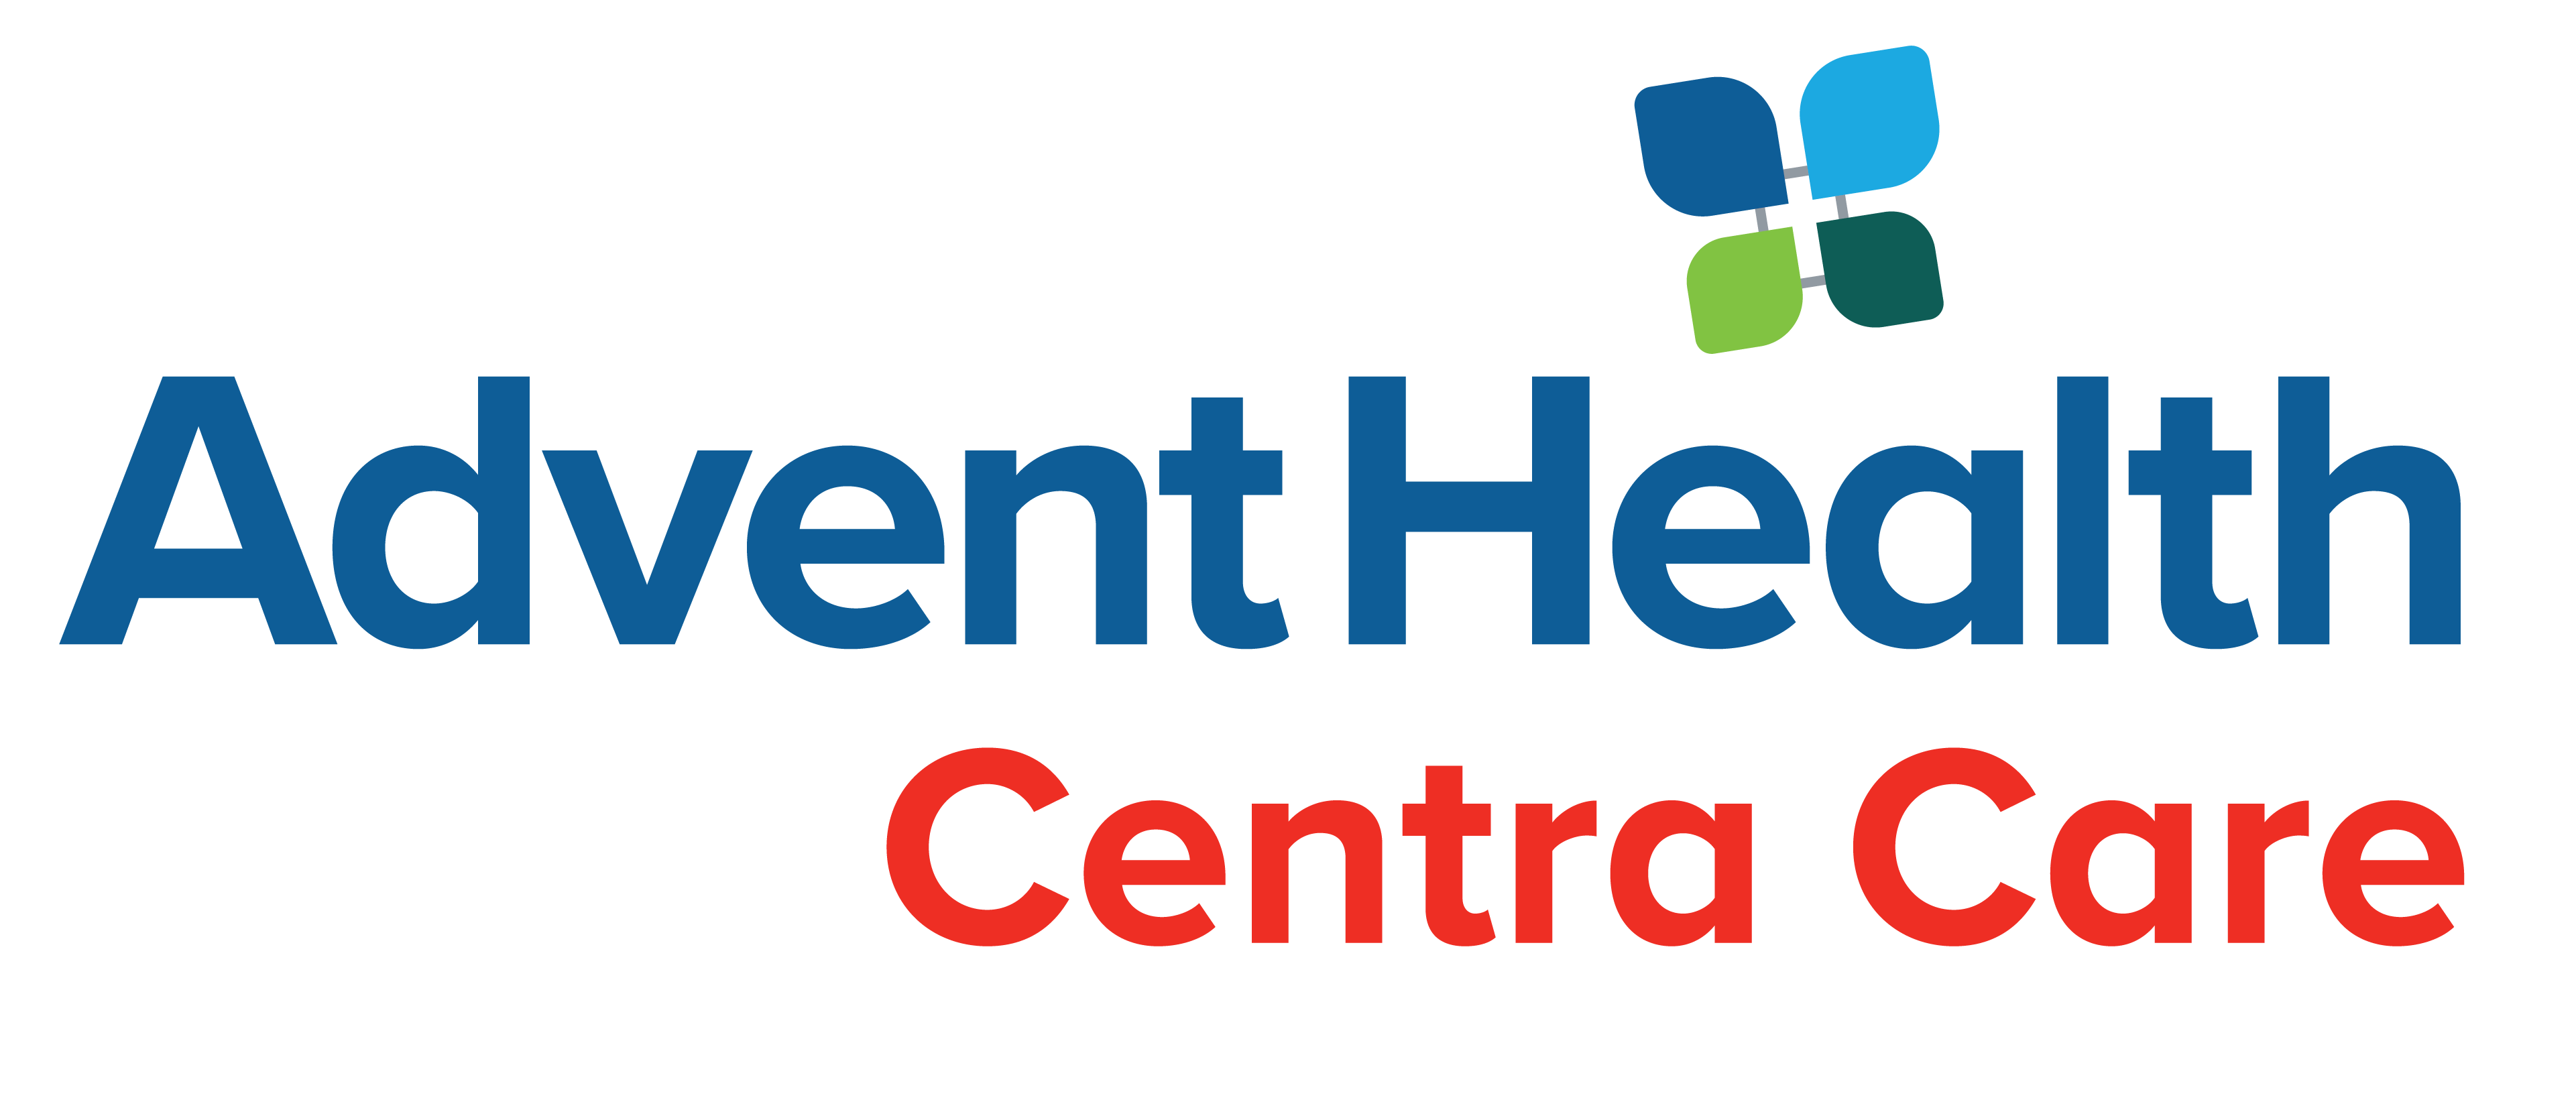 AdventHealth Centra Care